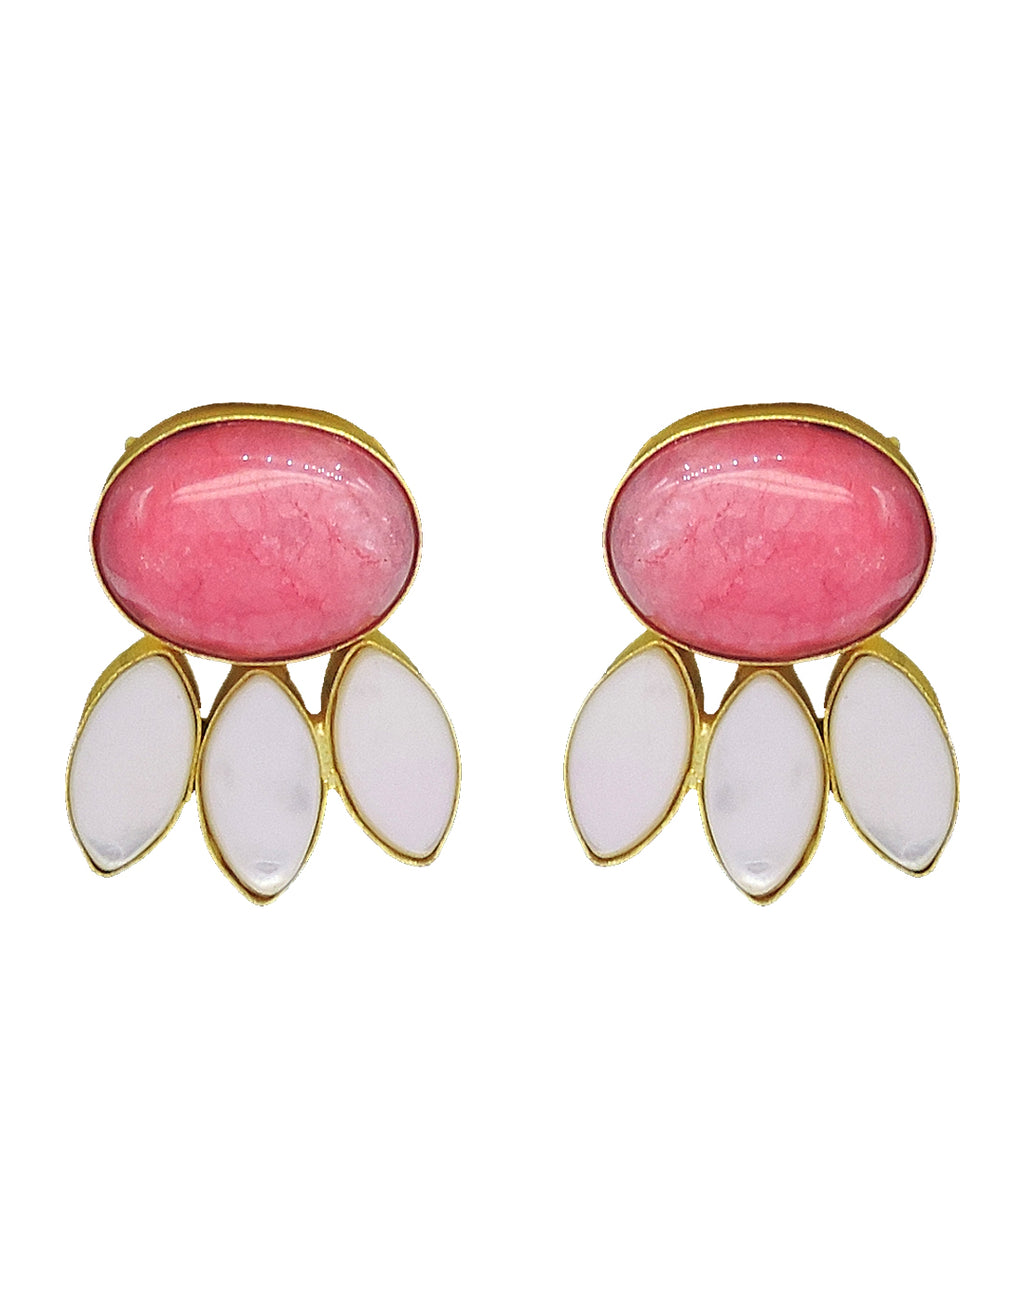 Pink Monalisa Earrings - Statement Earrings - Gold-Plated & Hypoallergenic Jewellery - Made in India - Dubai Jewellery - Dori